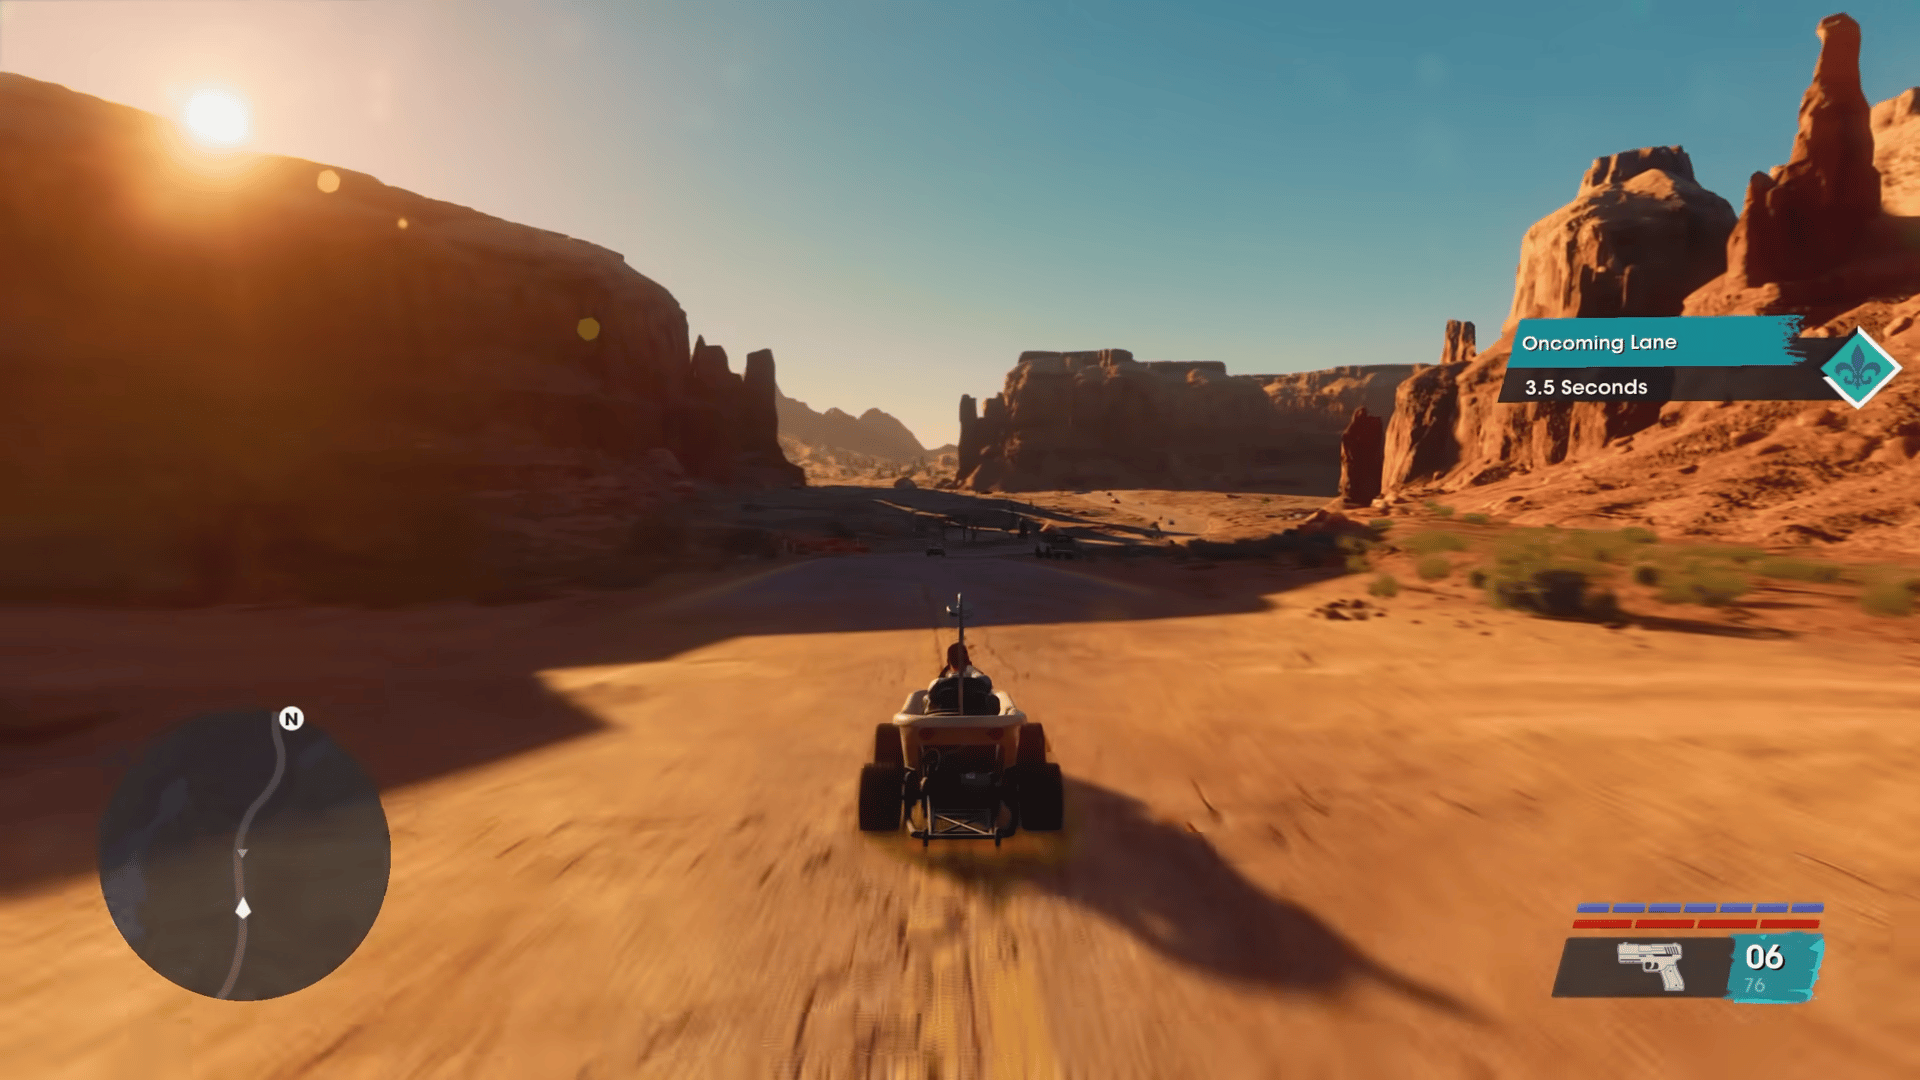 Driving the bathtub car in the desert